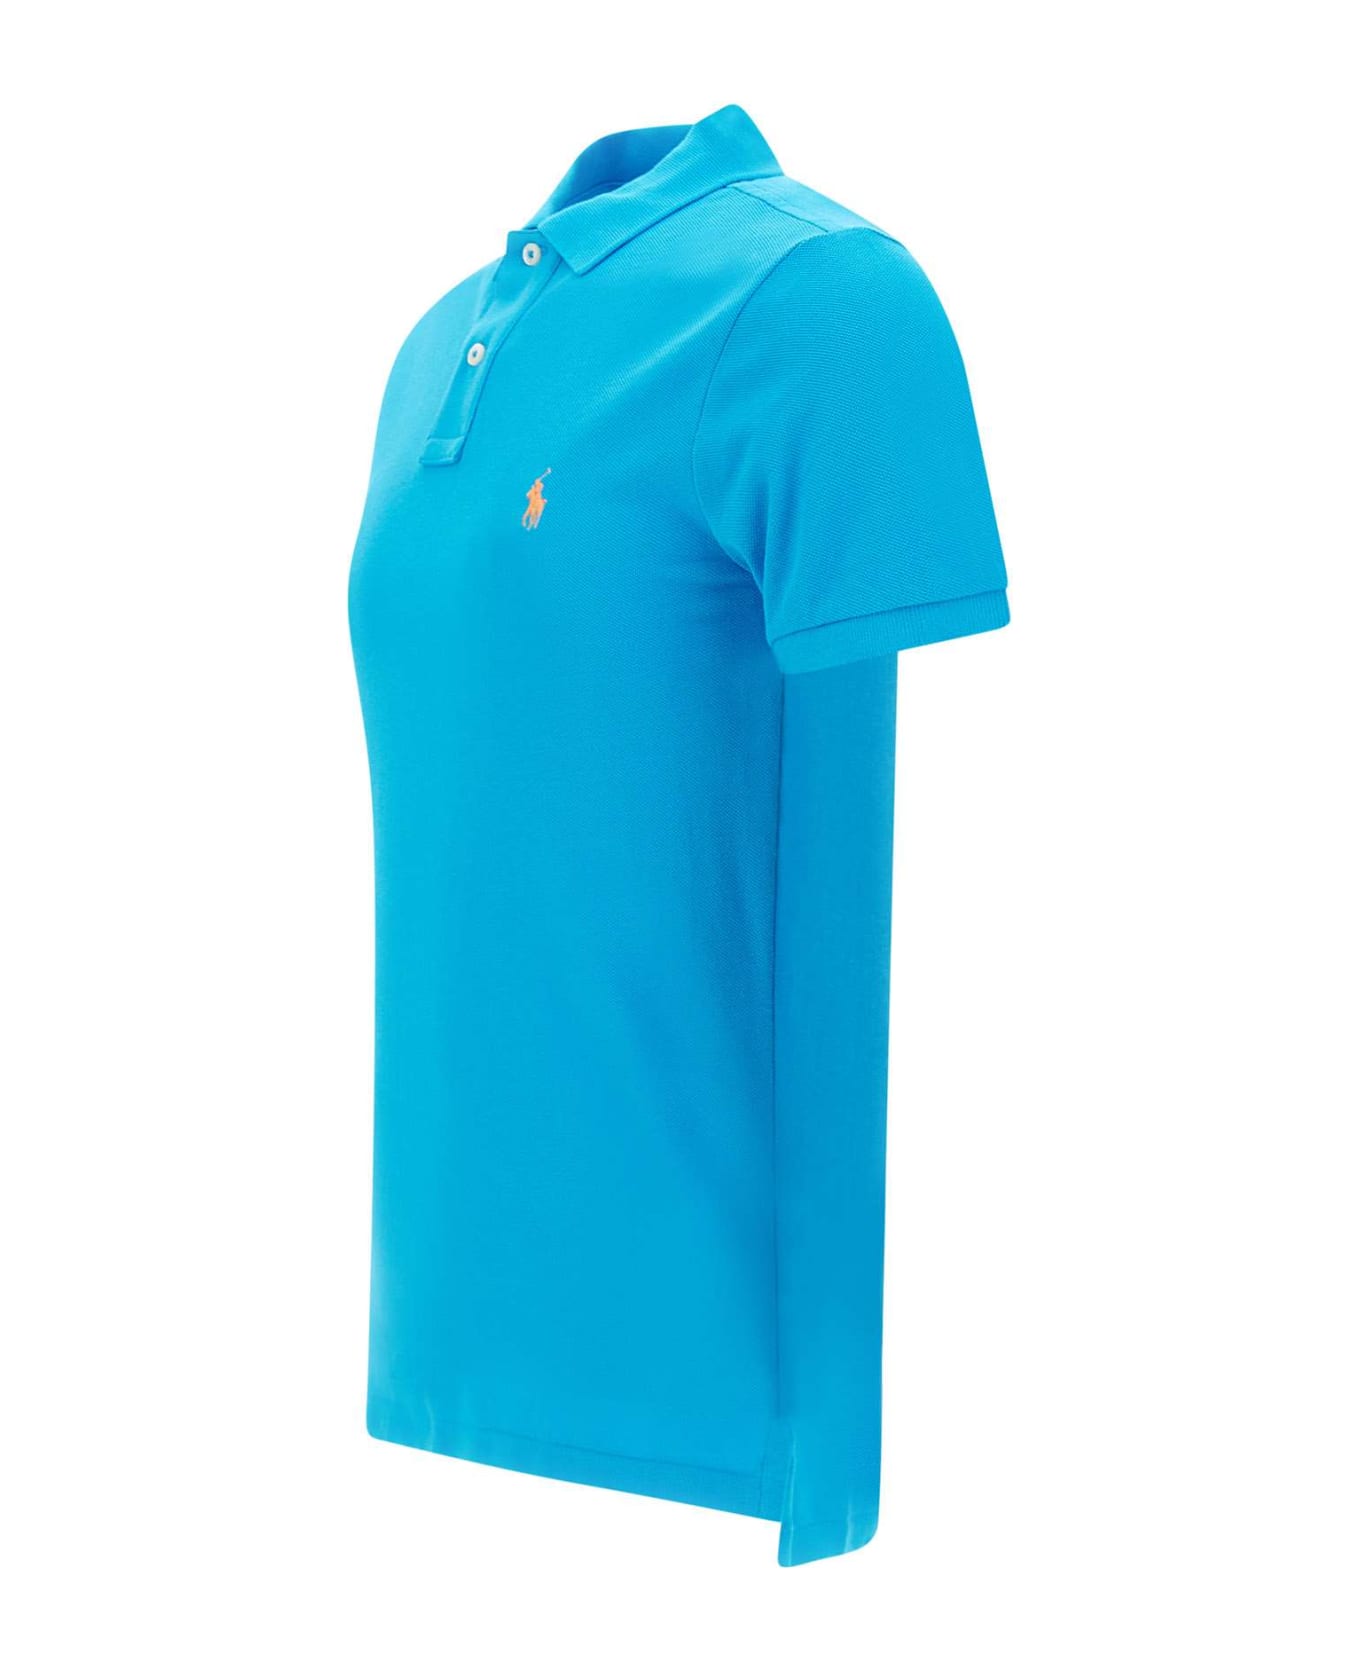 Polo Ralph Lauren Grotto Blue And Orange Slim-fit Piquet Polo Shirt - 023